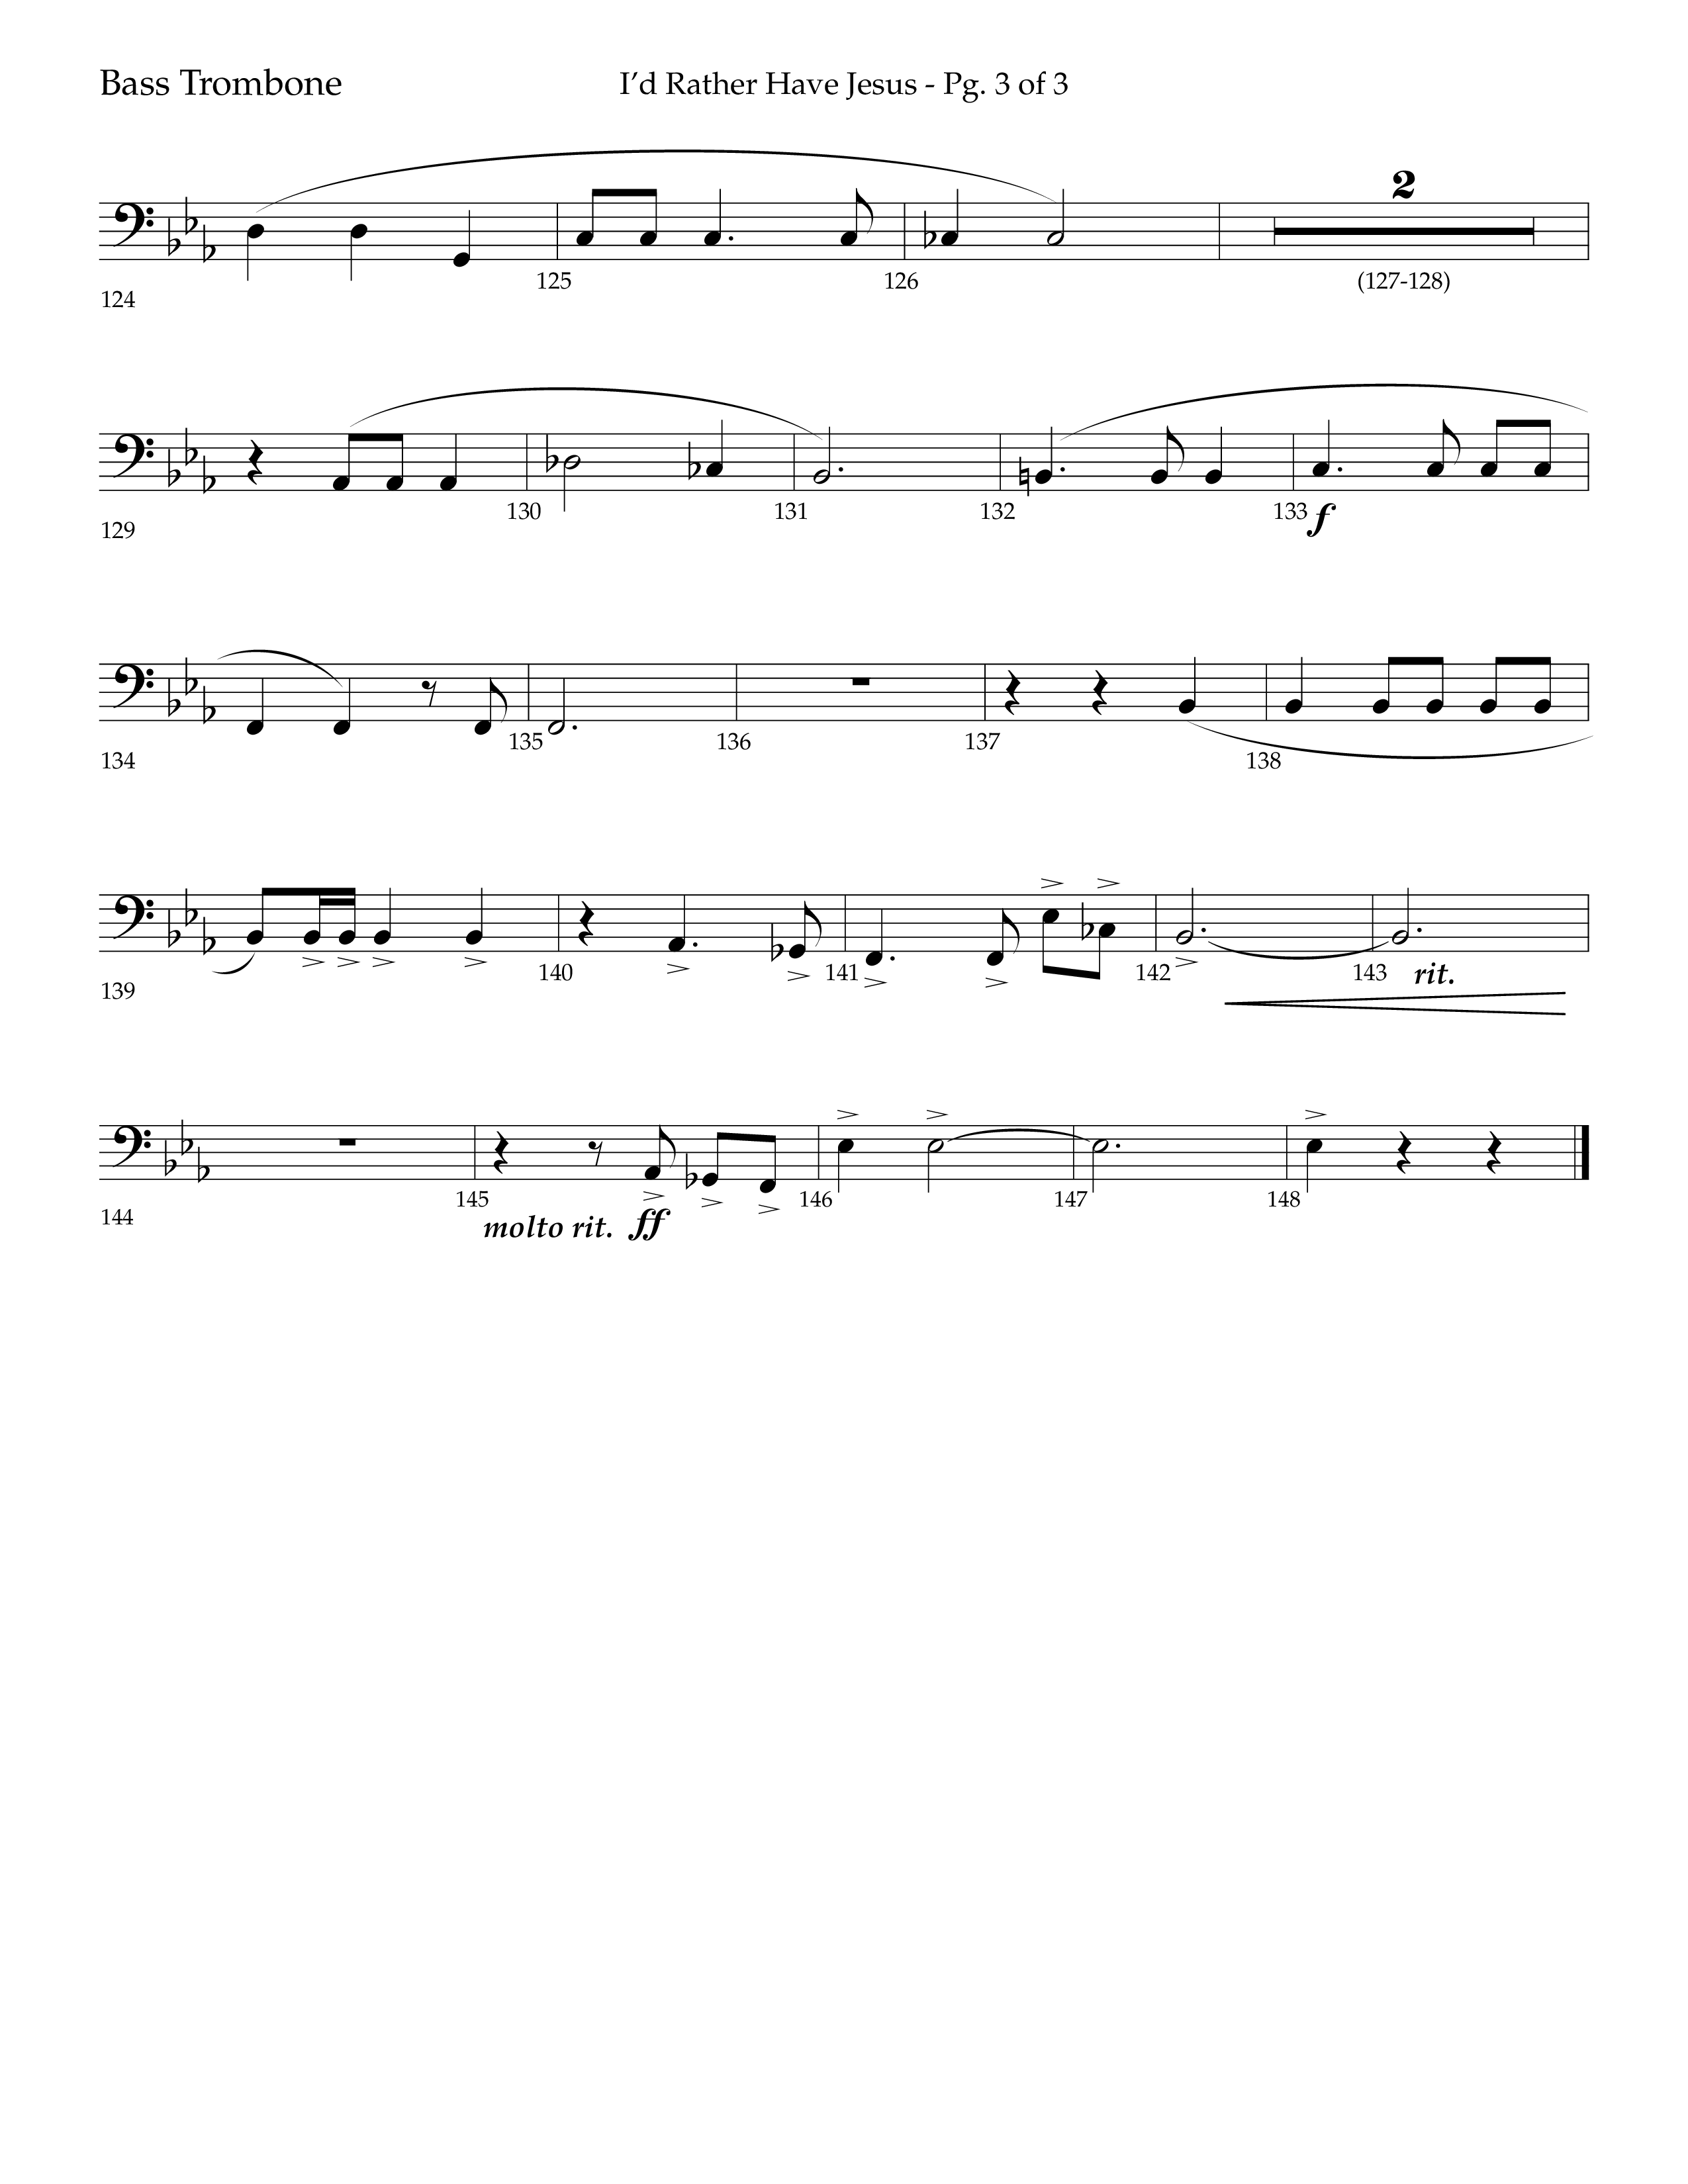 I'd Rather Have Jesus (Choral Anthem SATB) Bass Trombone (Lifeway Choral / Arr. Richard Kingsmore)